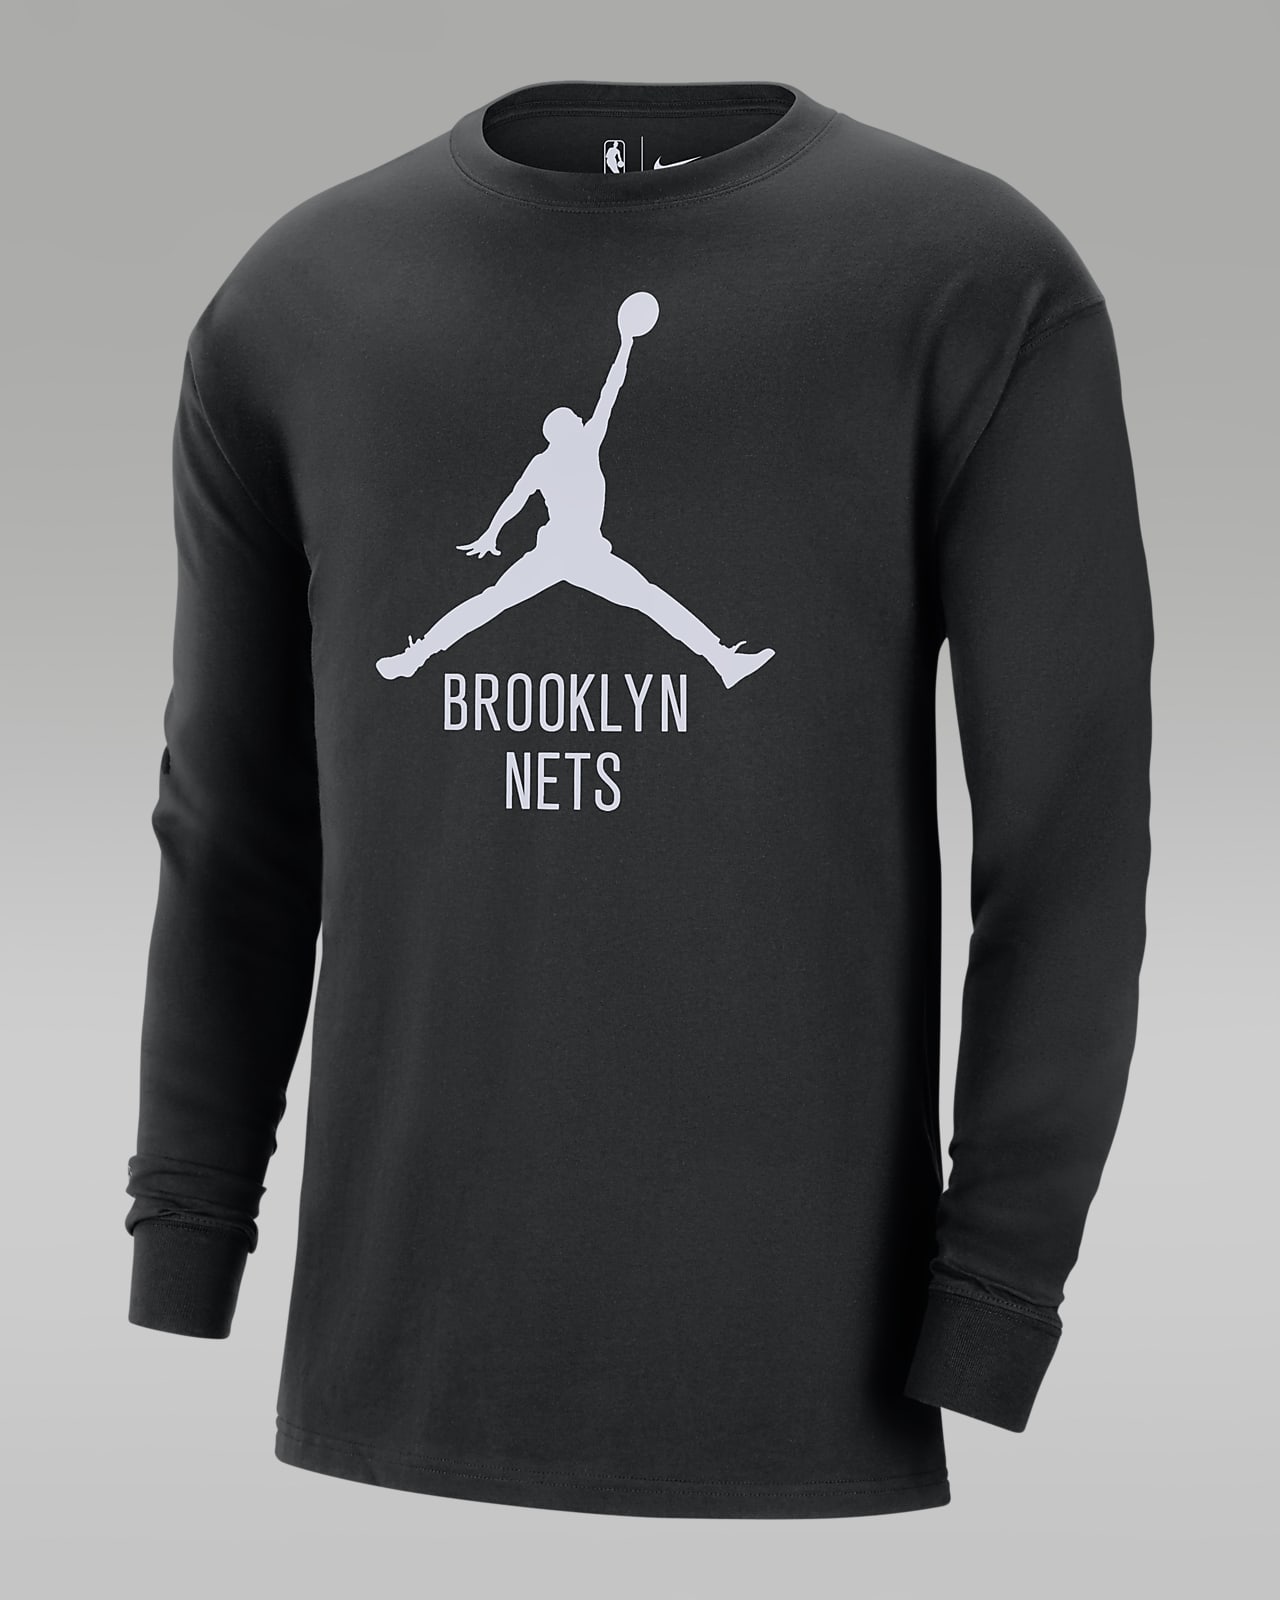 Brooklyn Nets Essential Men's Jordan NBA Long-Sleeve T-Shirt.